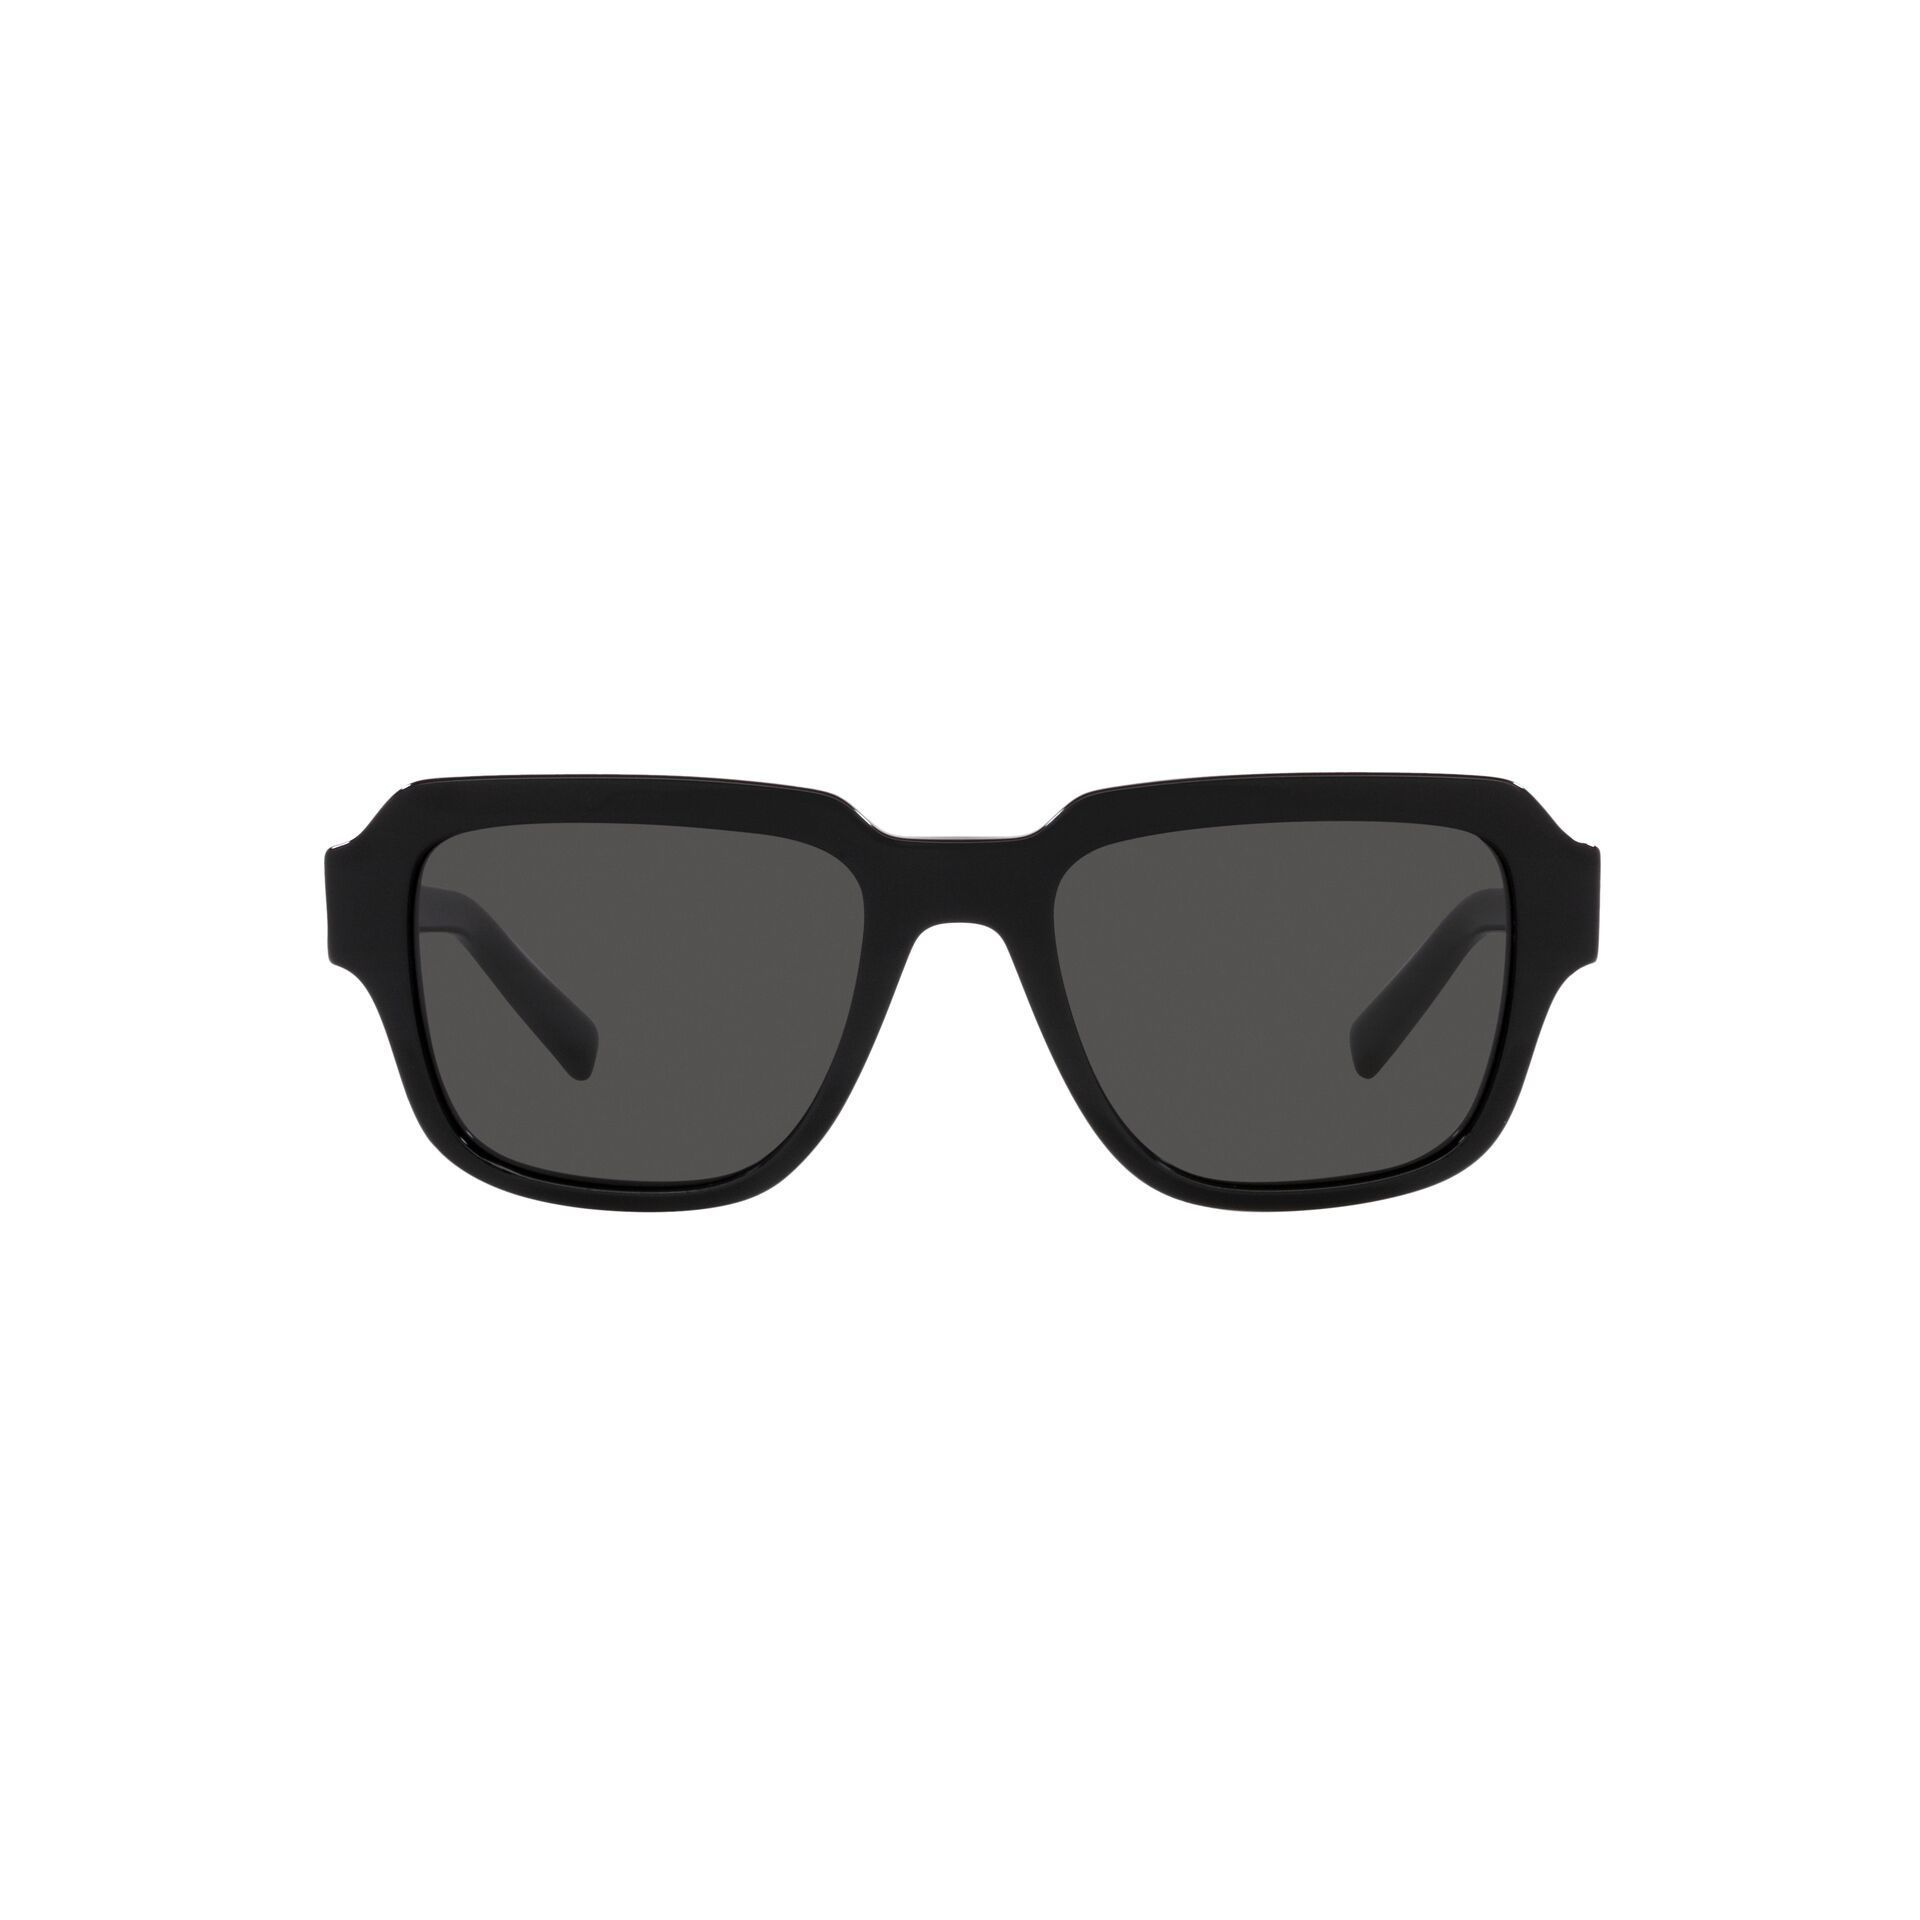 DG4402 Square Sunglasses 501 87 - size 52